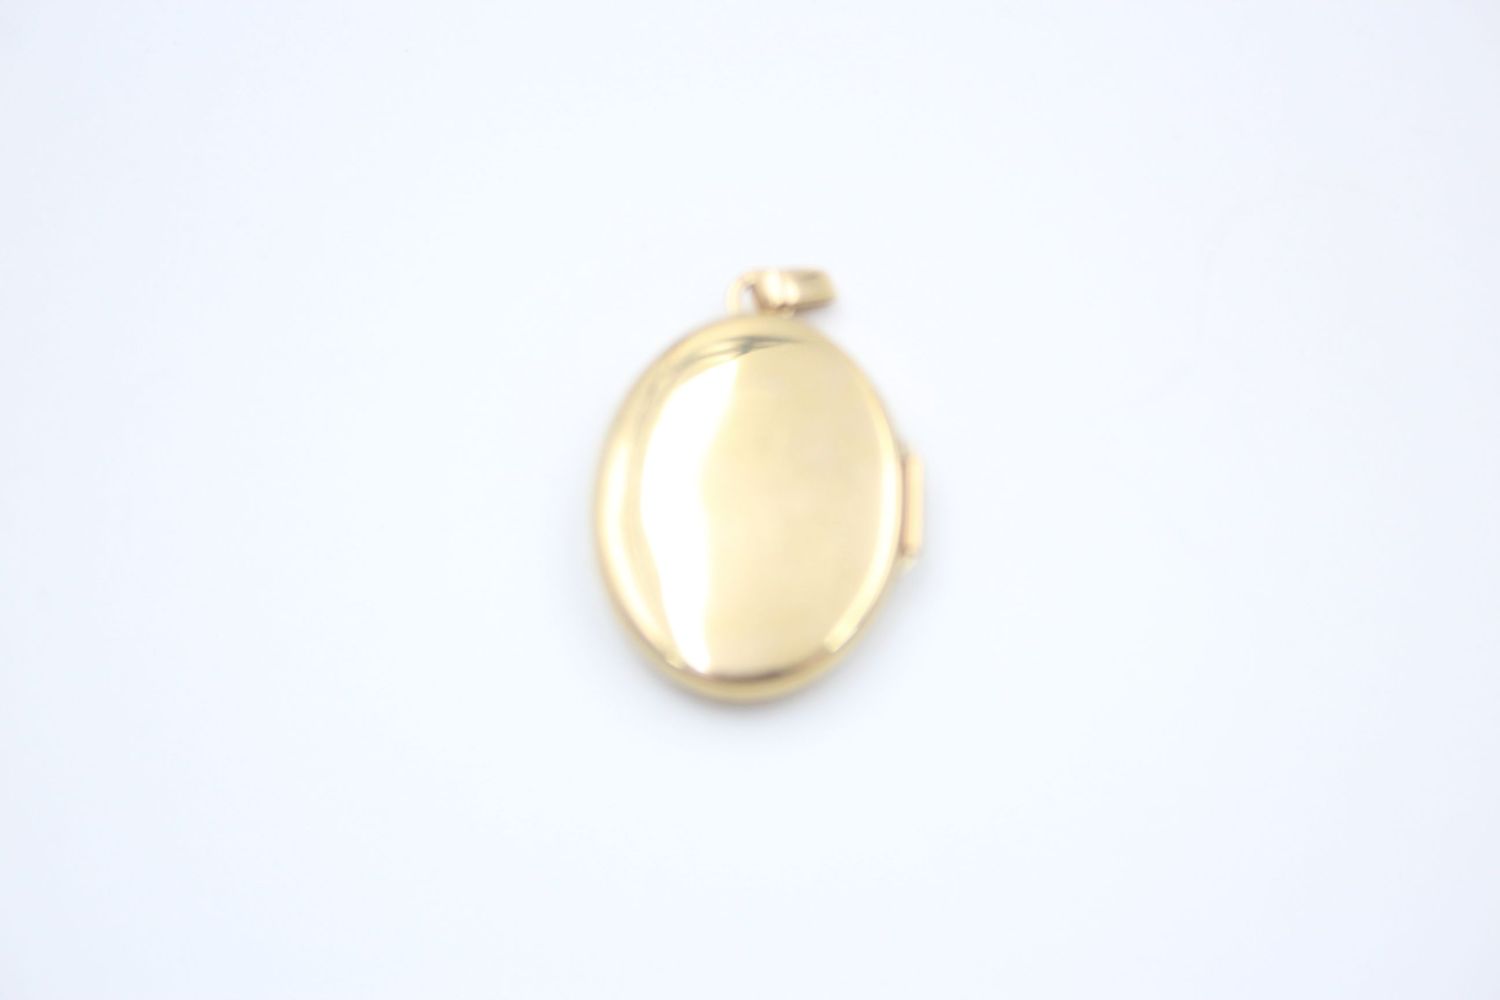 2 x 9ct gold patterned locket pendants 3 grams gross - Image 3 of 8